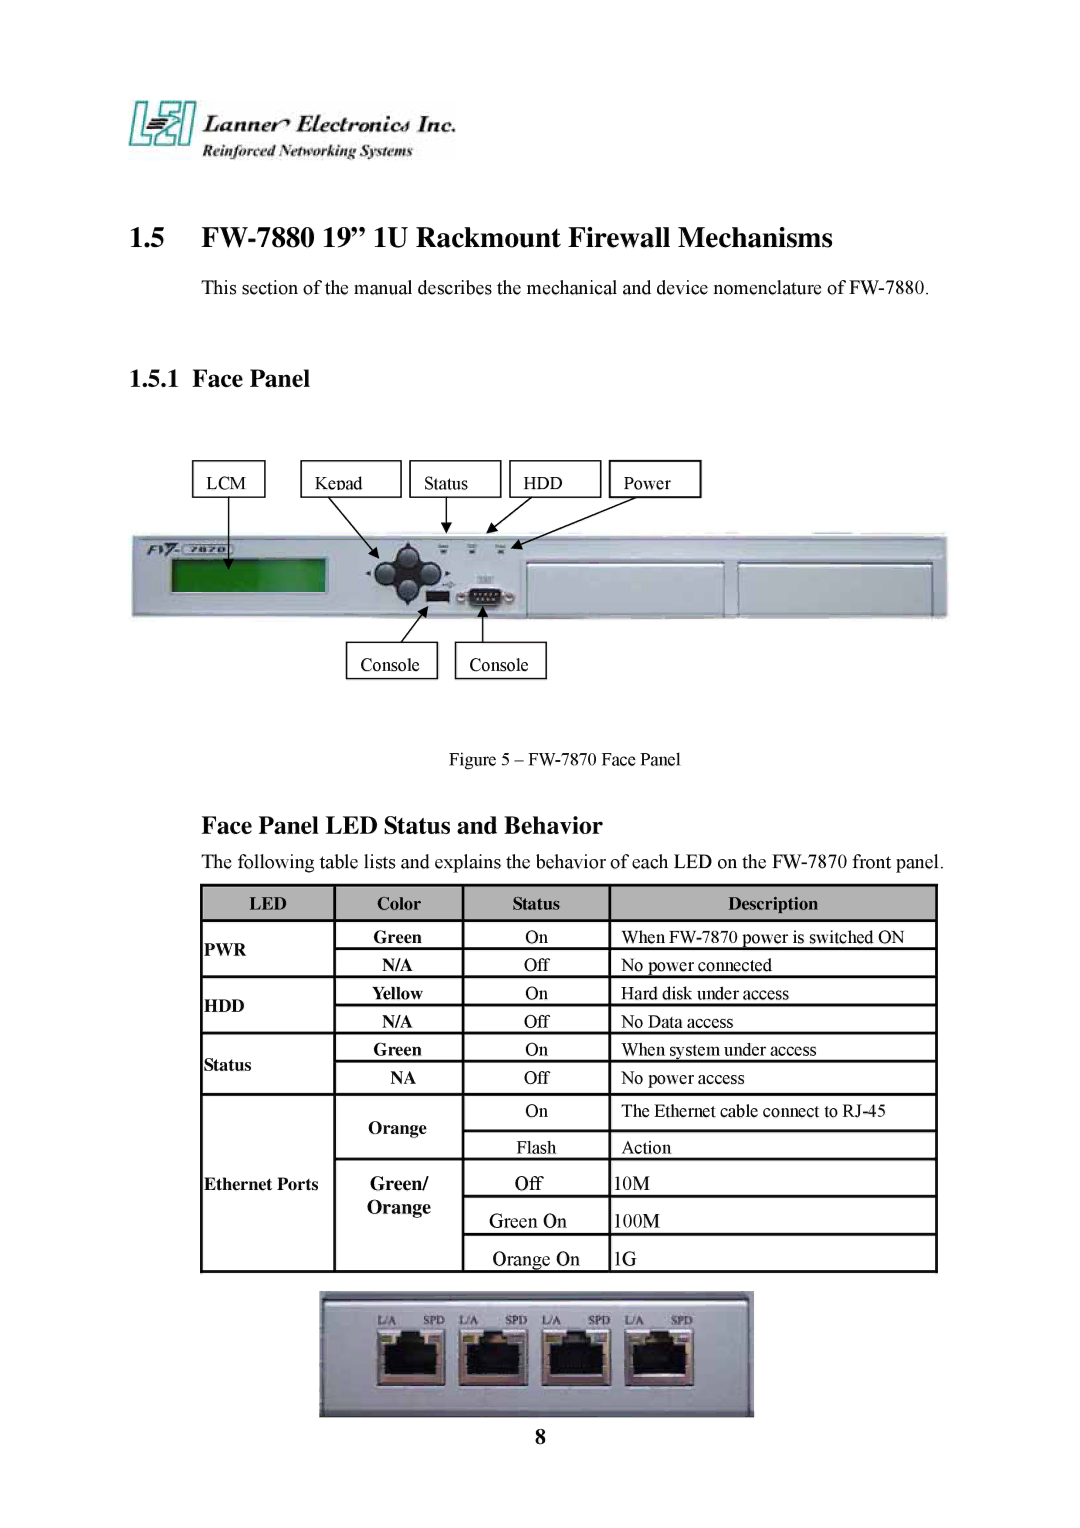 Lanner electronic FW-7870 FW-7880 19 1U Rackmount Firewall Mechanisms, Face Panel LED Status and Behavior, Orange 